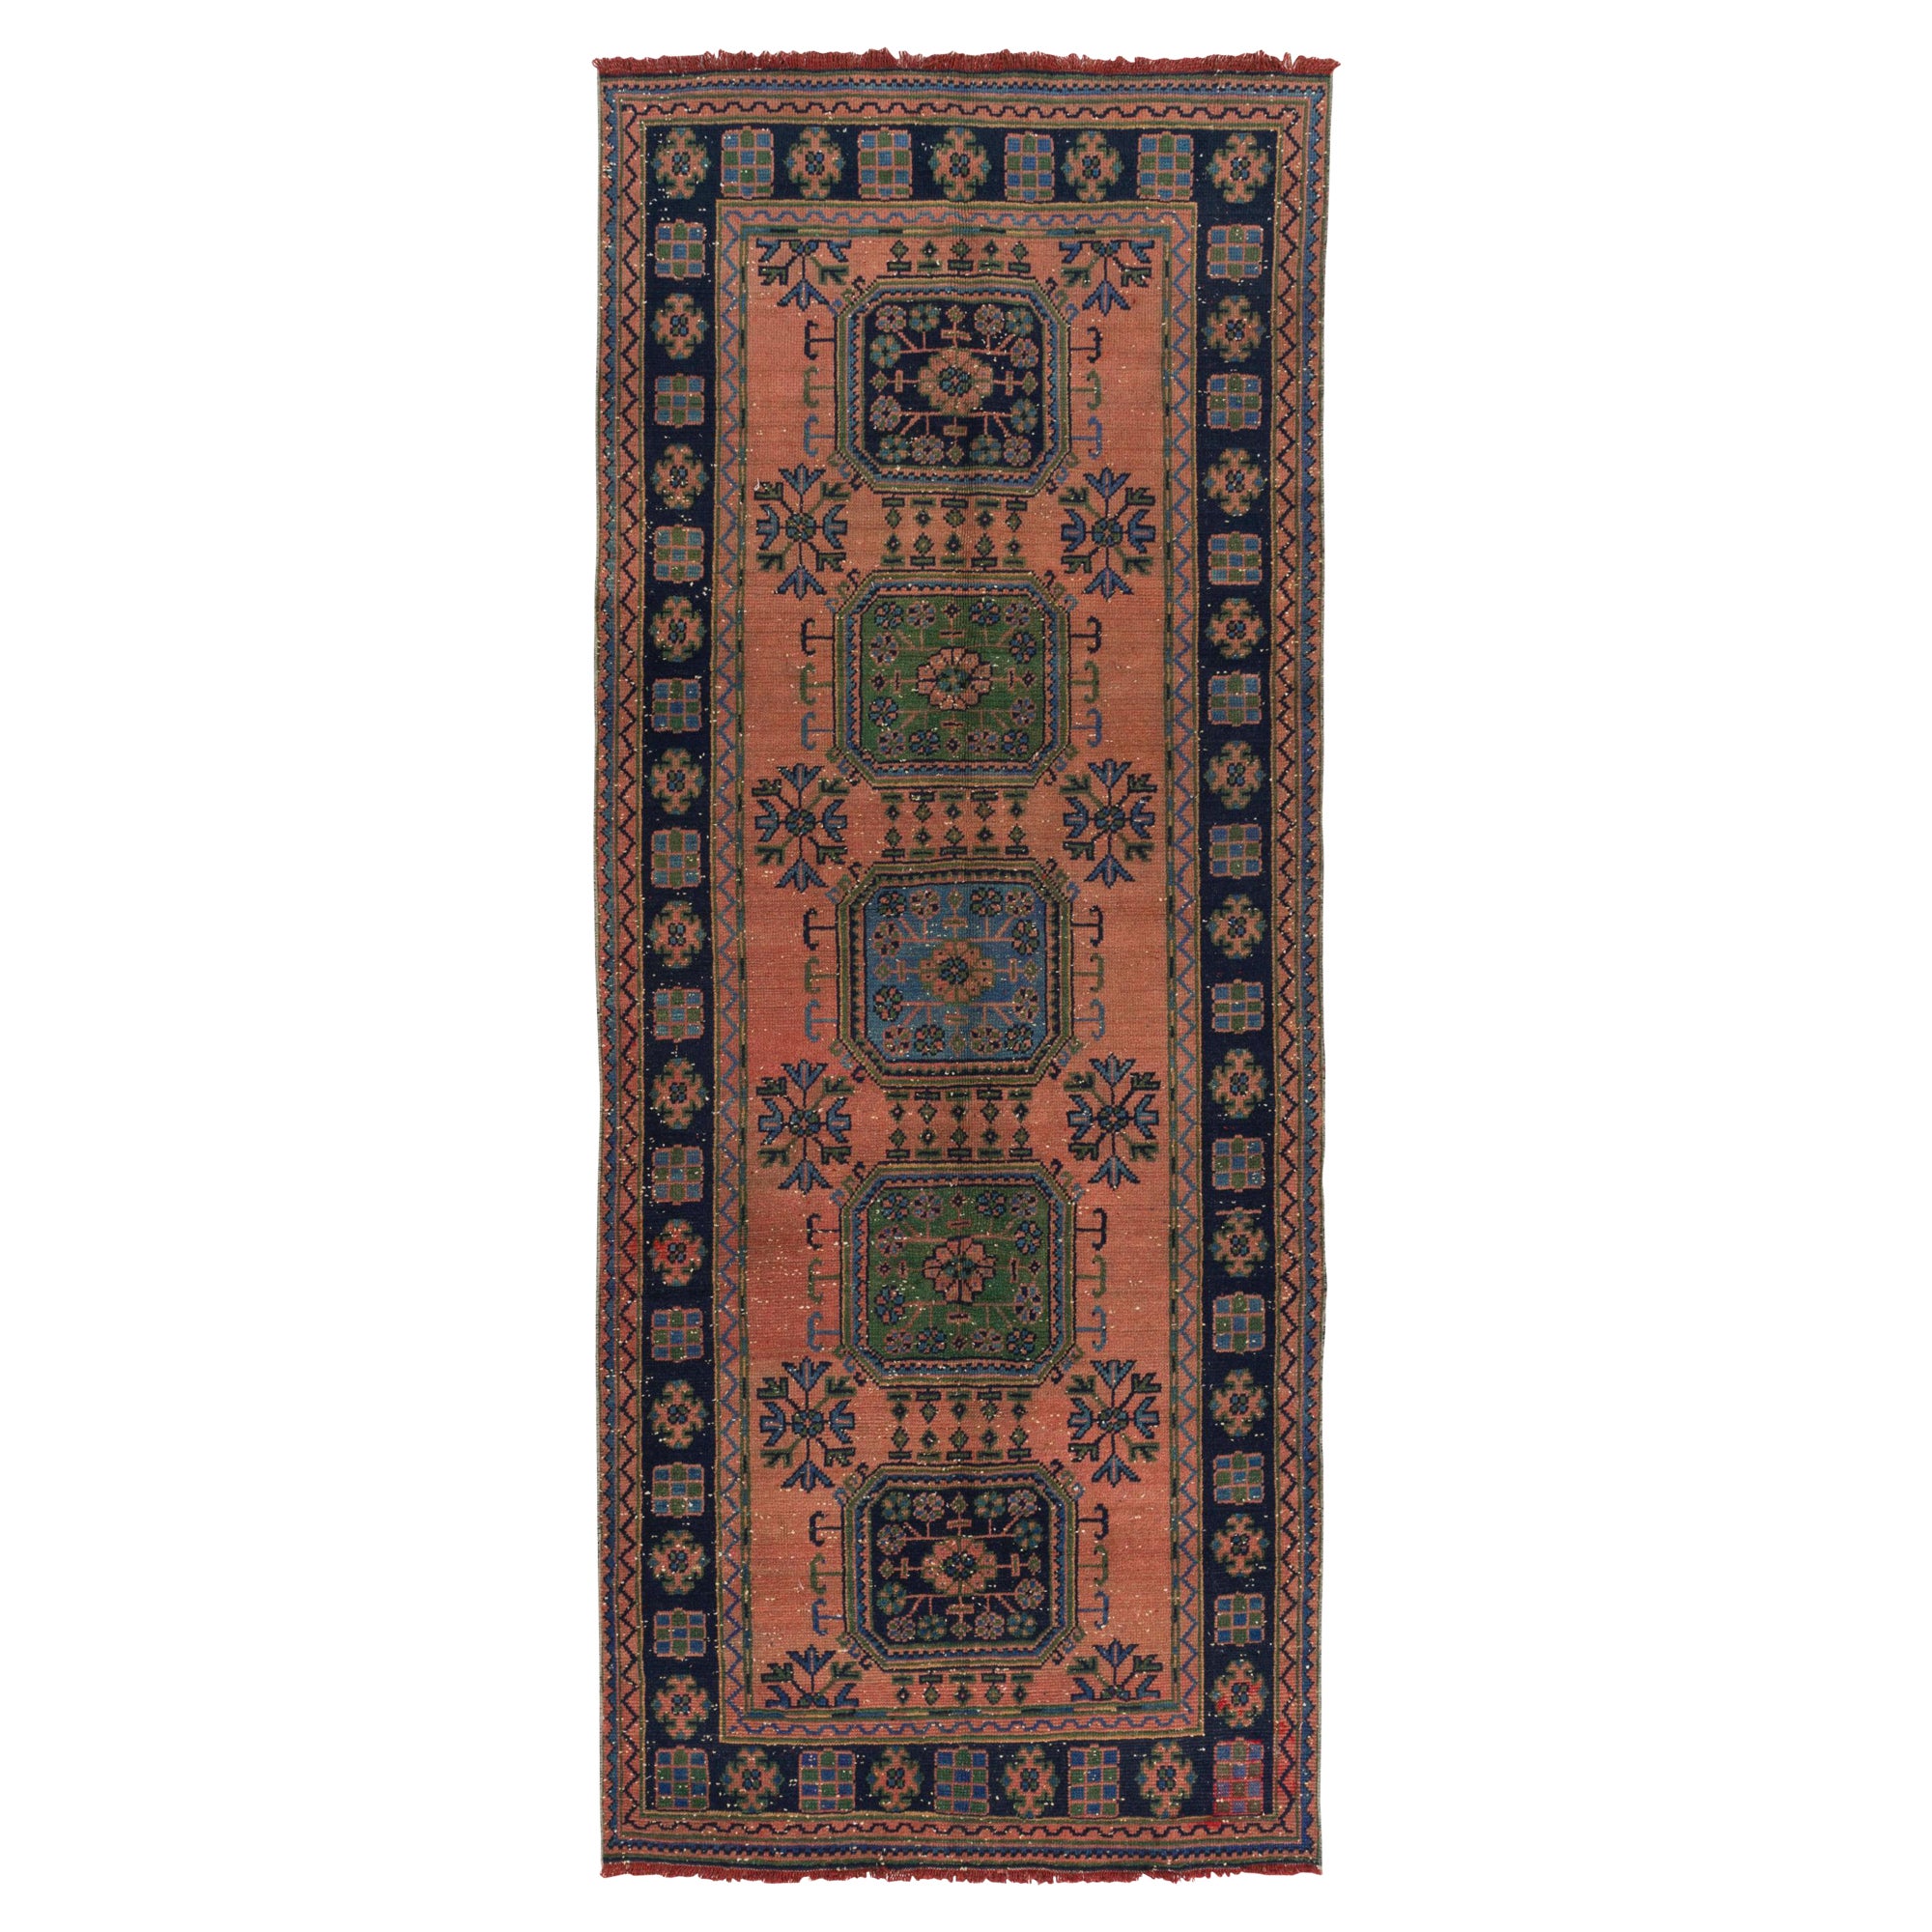 4.7x11 Ft Vintage Turkish Runner Rug, One of a kind Handmade Hallway Carpet (tapis d'entrée fait à la main)